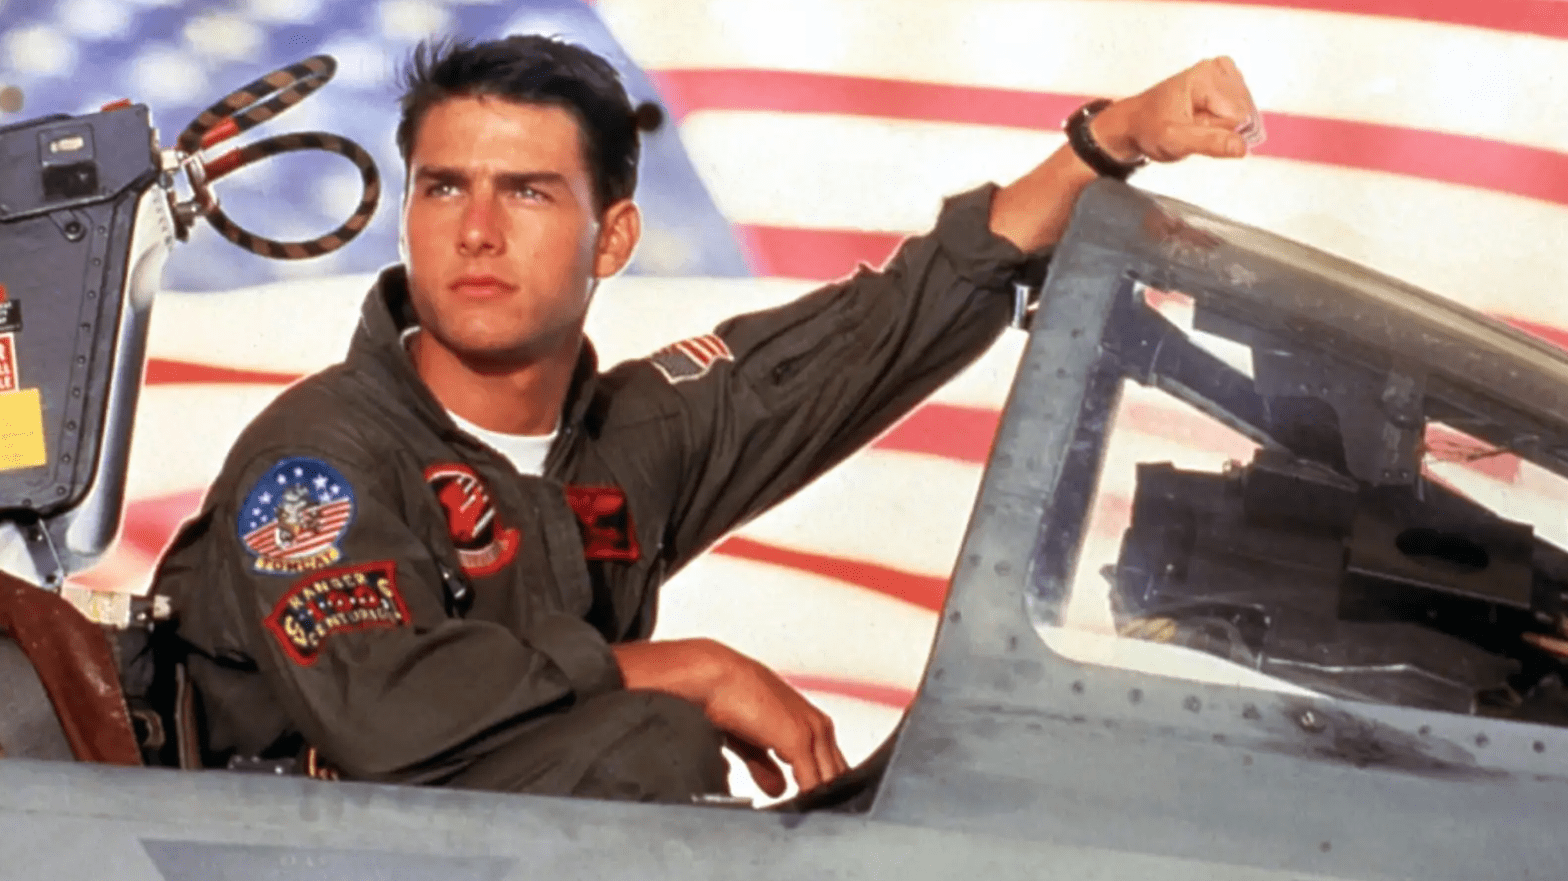 Promotional photo of actor Tom Cruise for the original Top Gun film, released in 1986. (Image: MovieStillsDB.com)